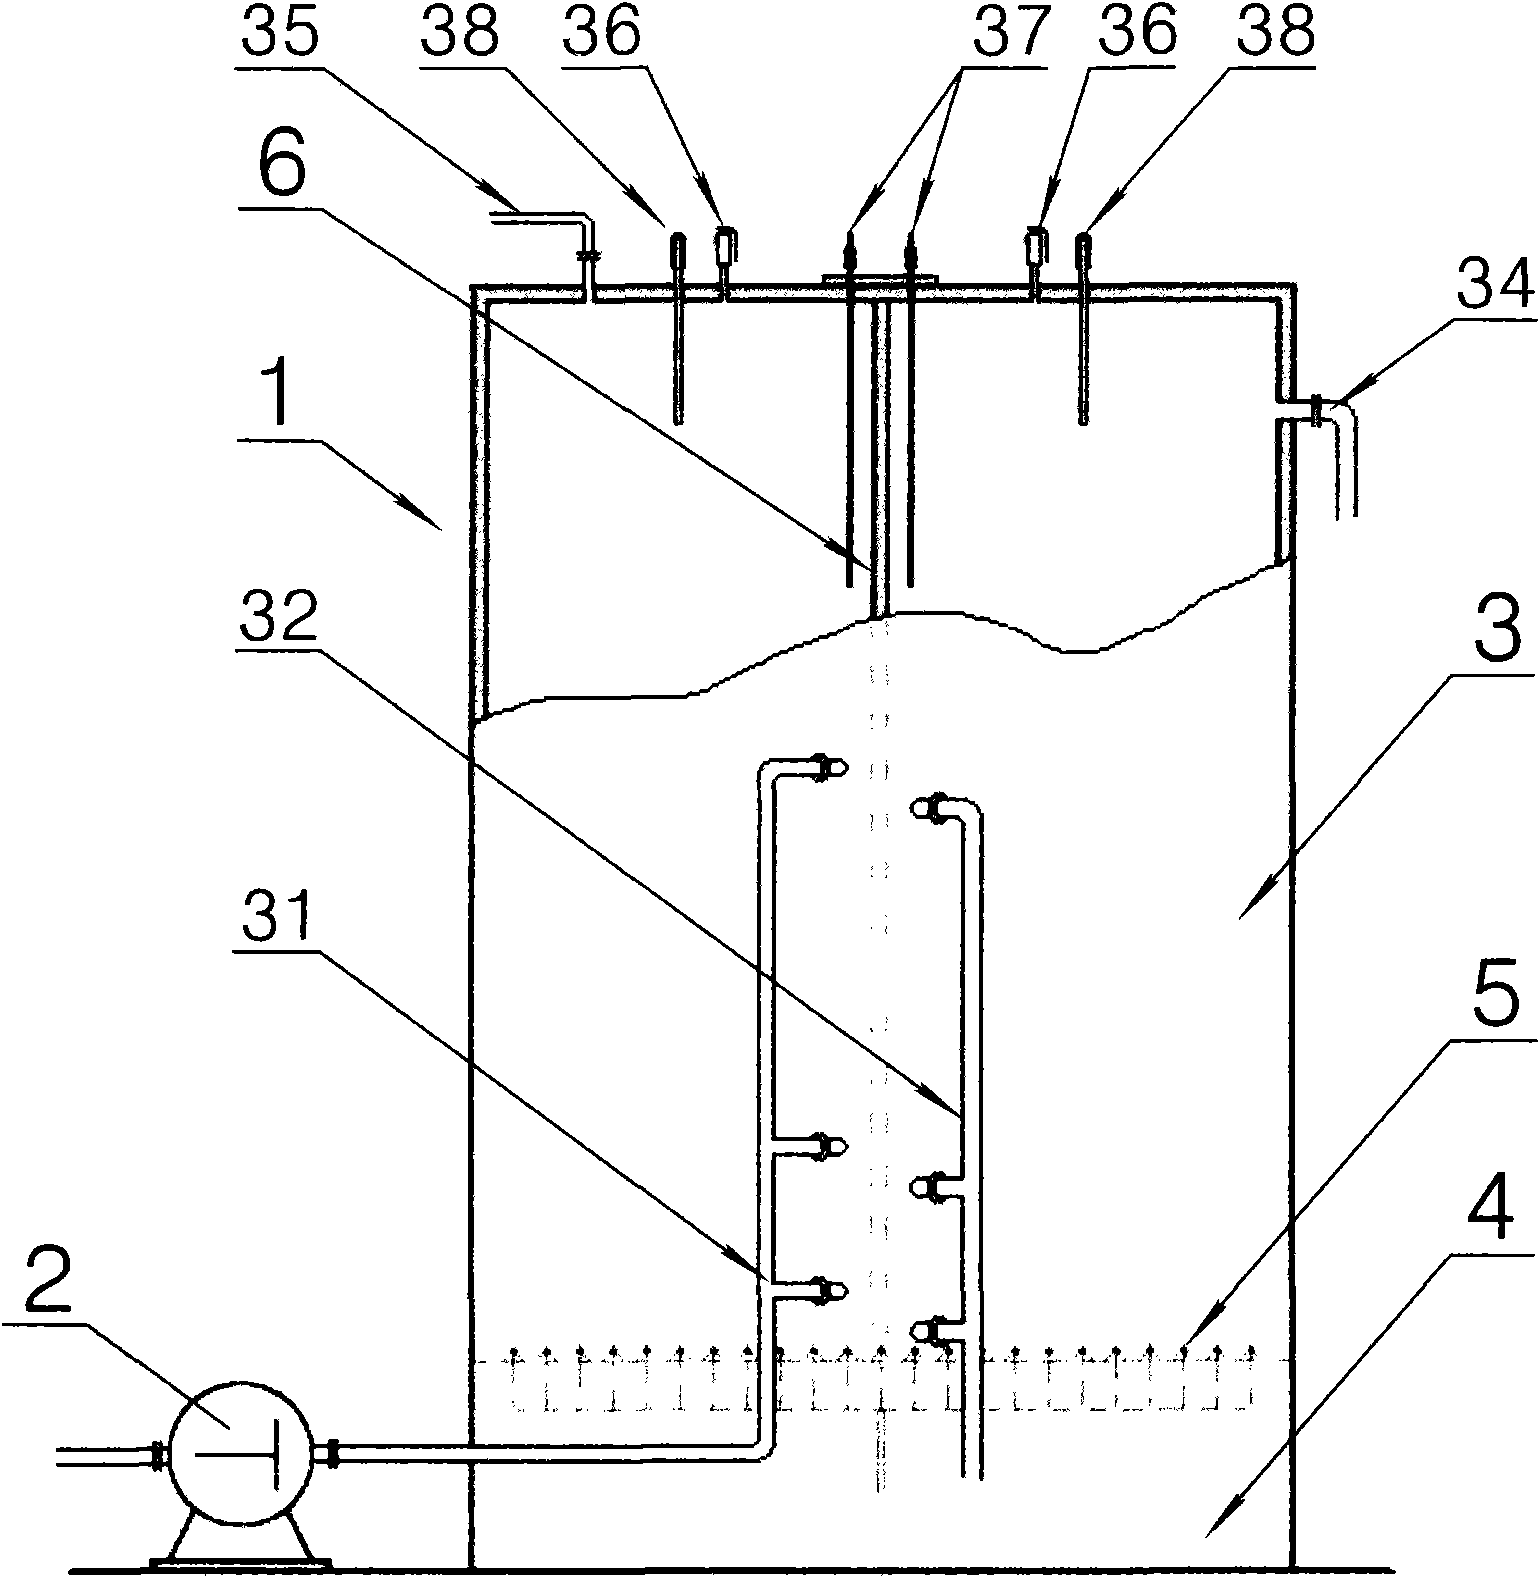 Vertical dry-process anaerobic fermentation device